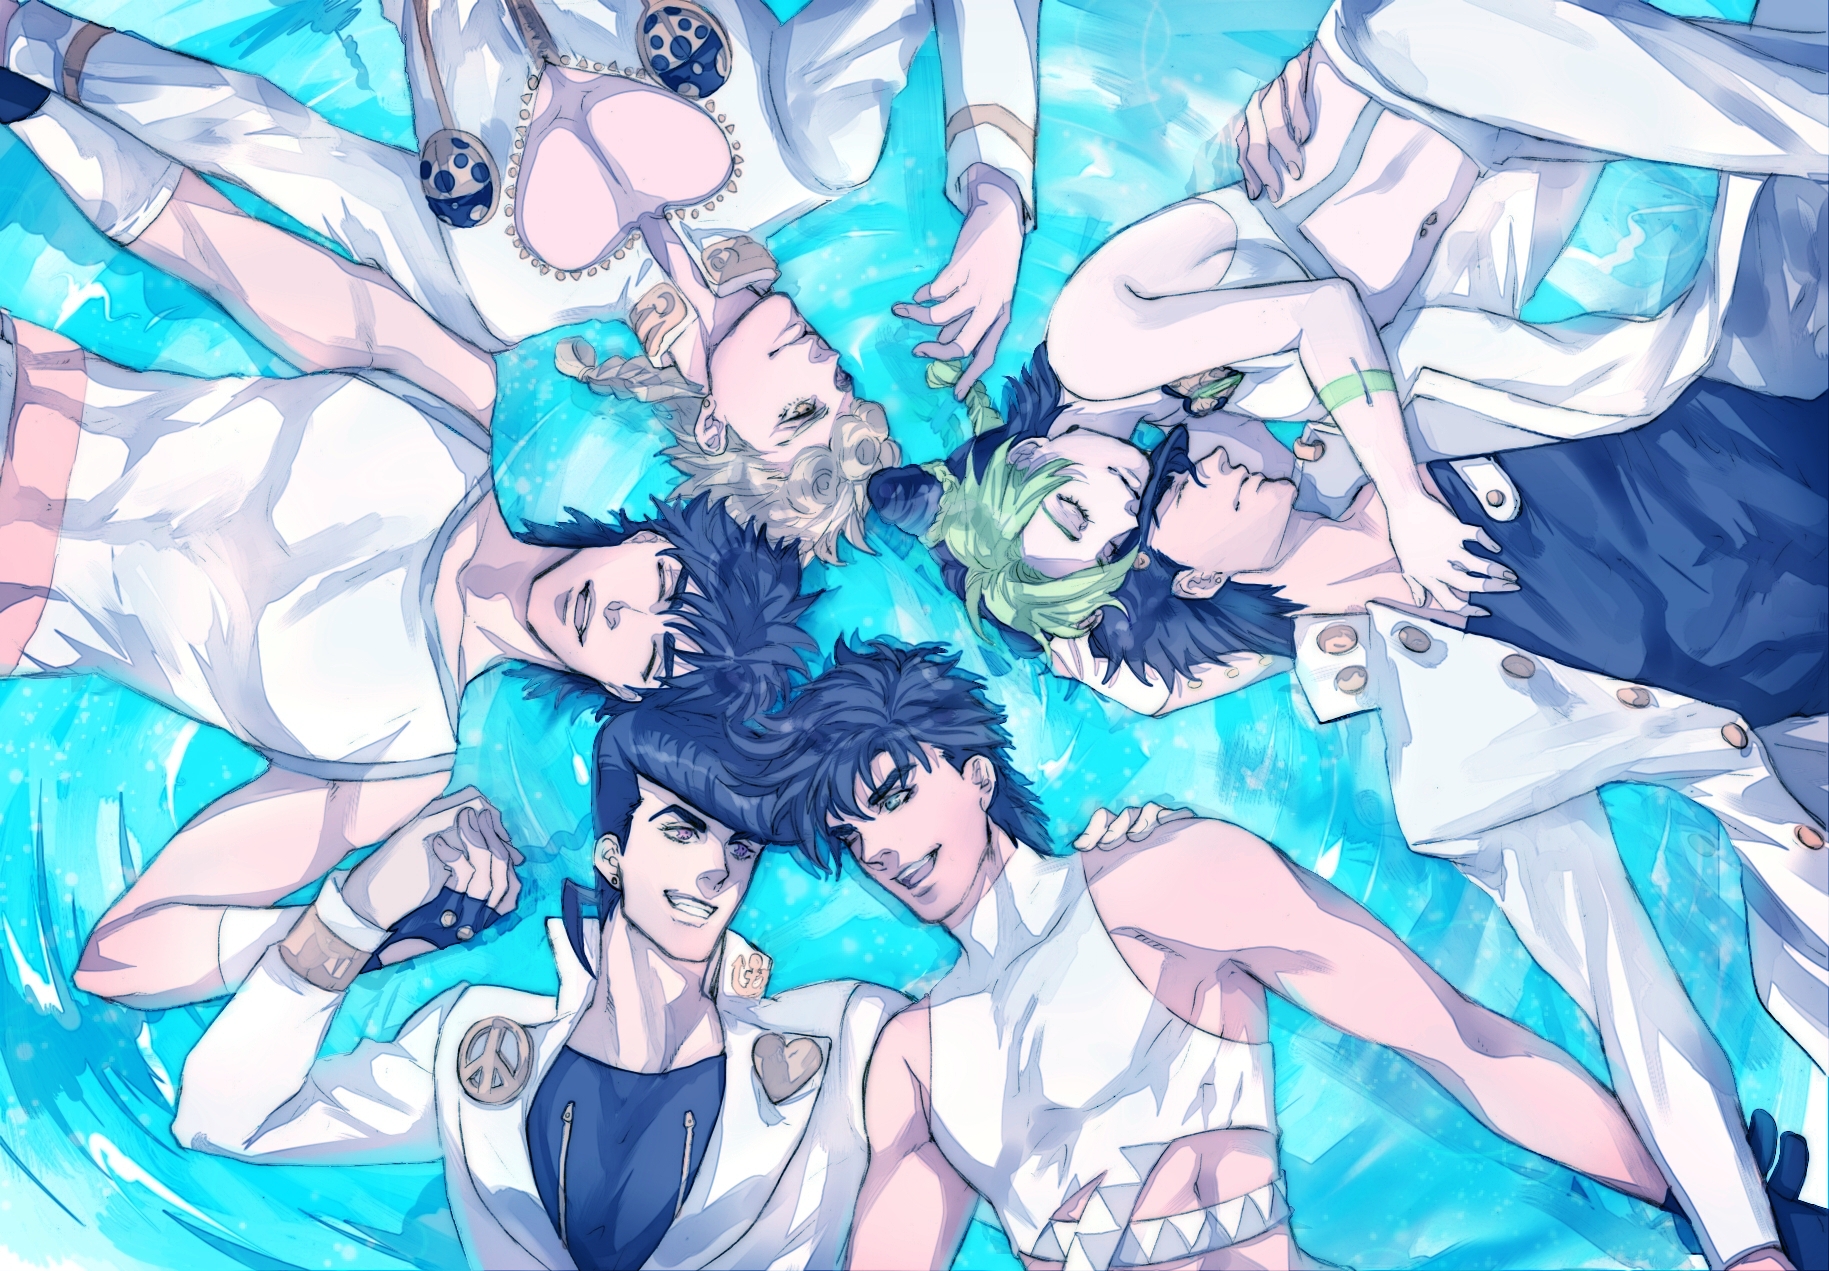 Stone Ocean no Kimyou na Bouken Anime Image Board